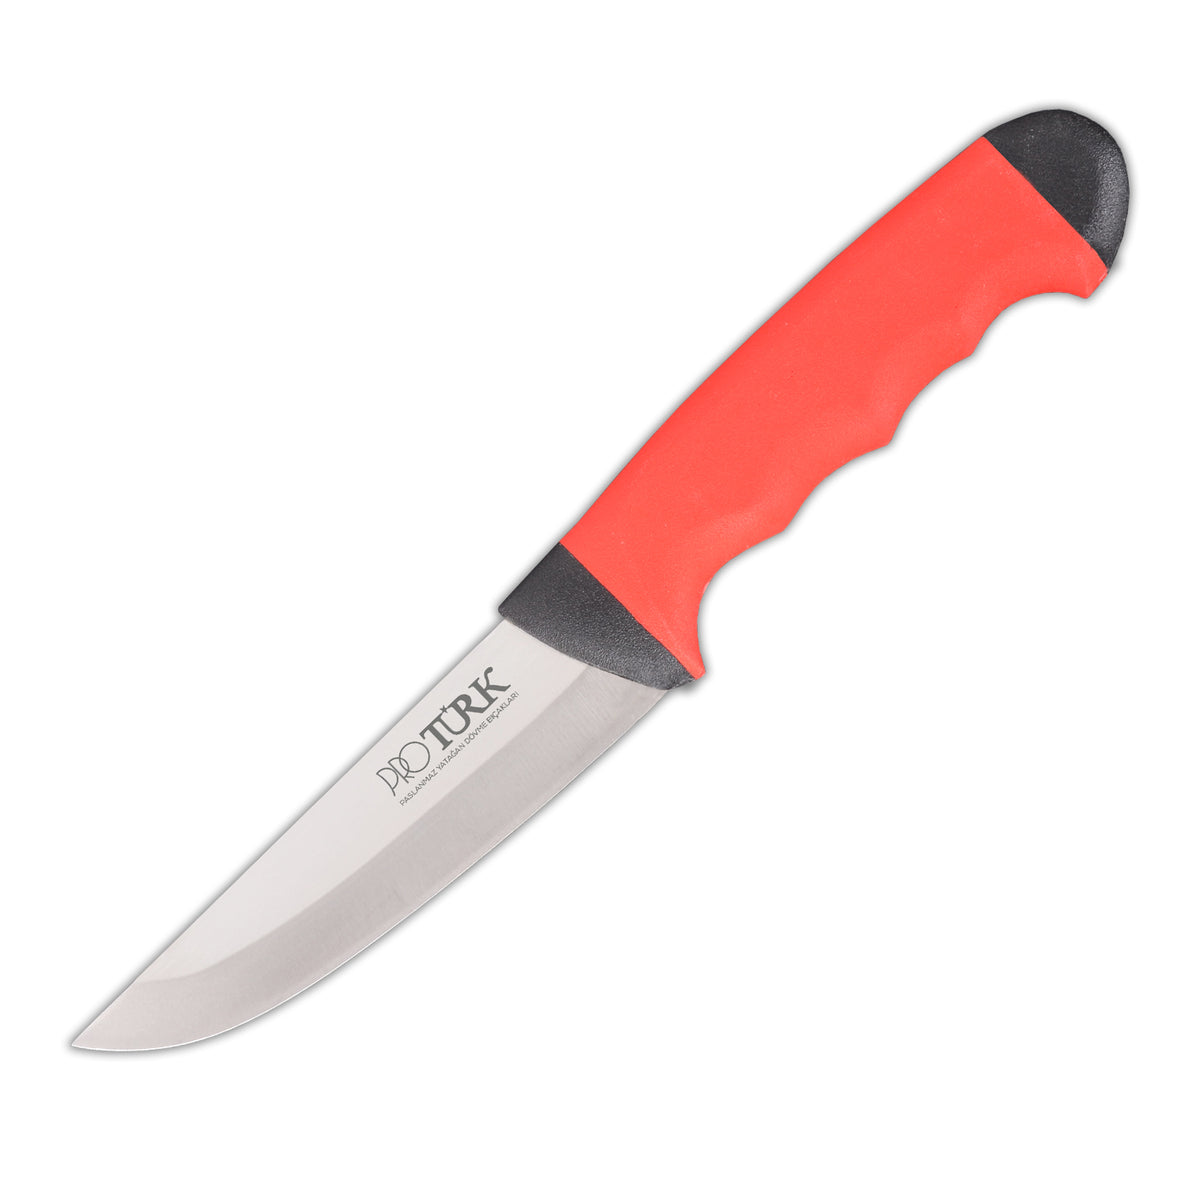 Protürk Et Bıçağı 1 Numara